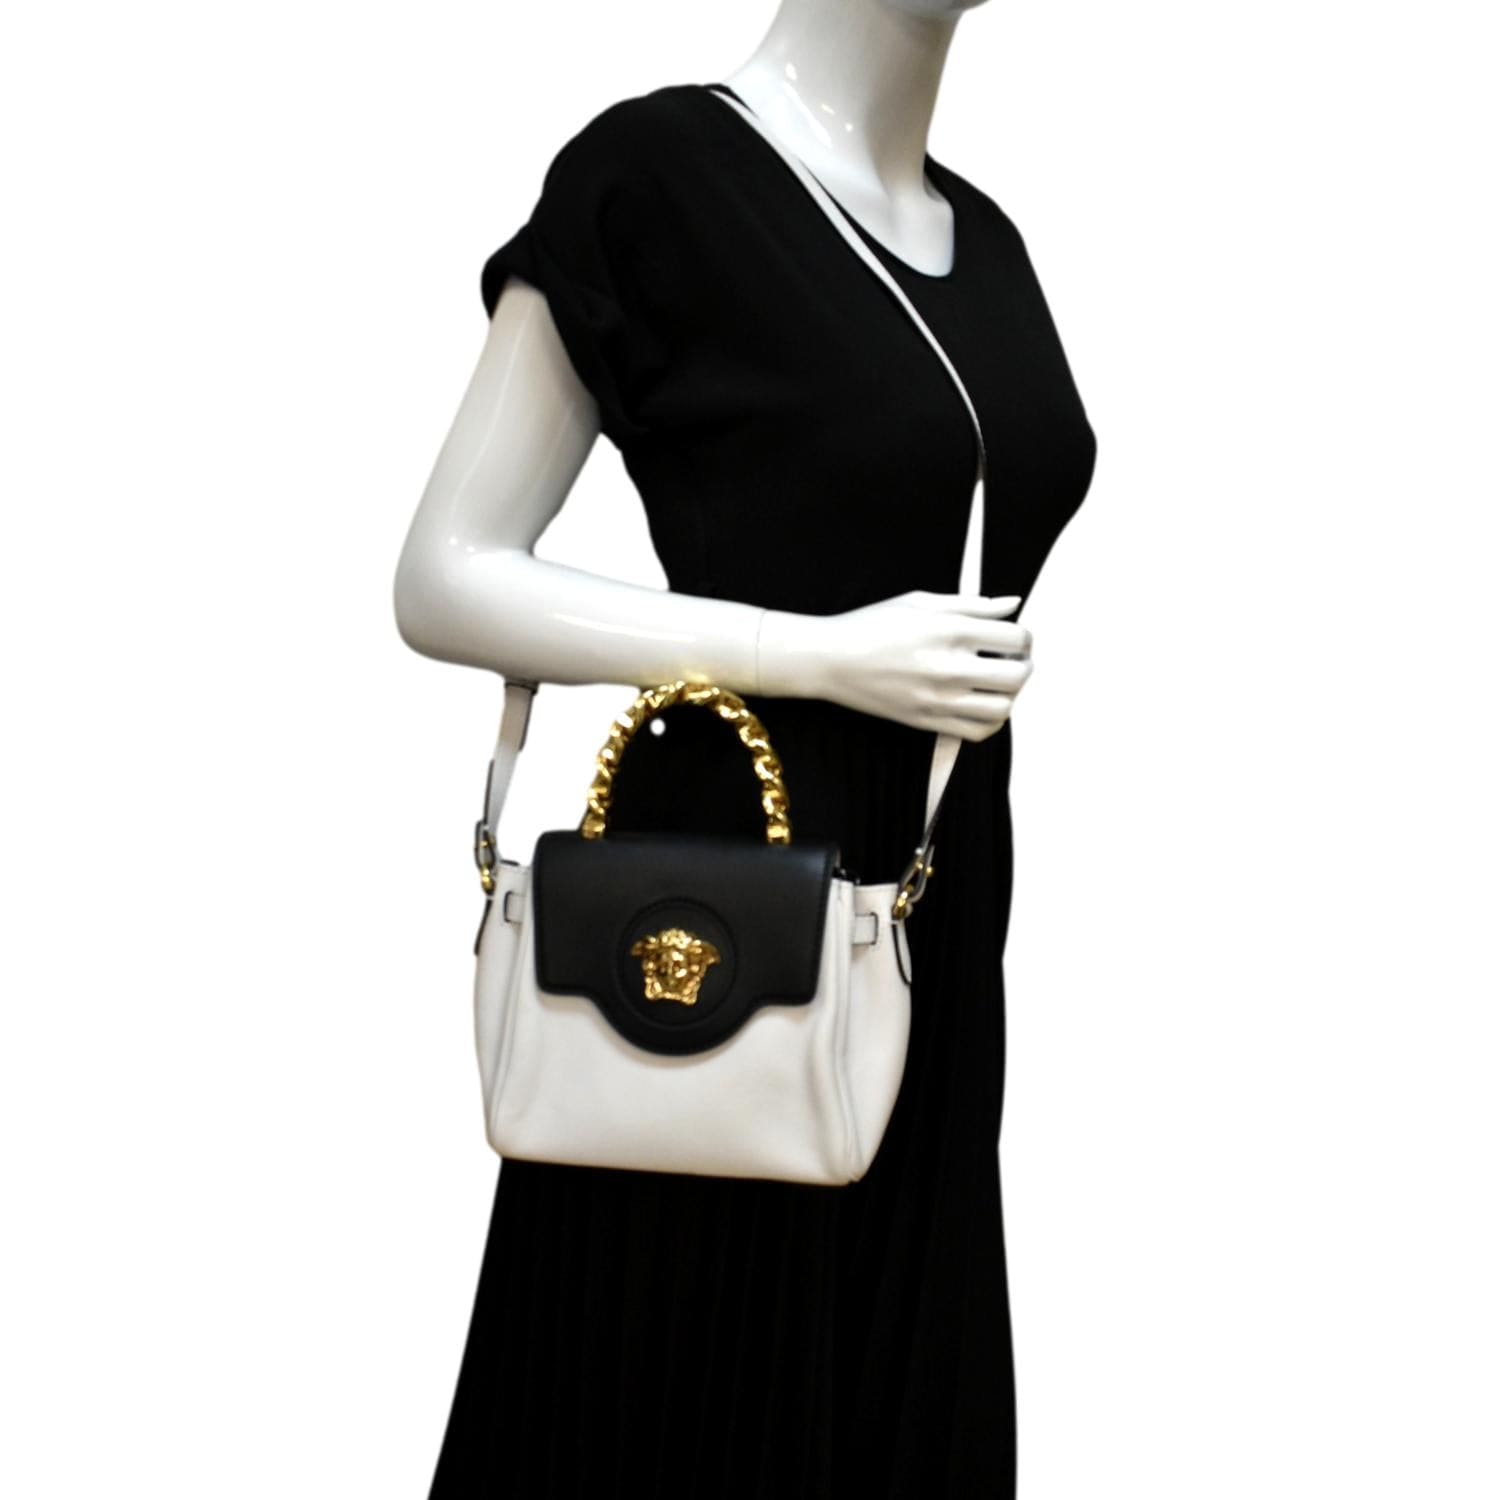 VERSACE La Medusa Bags & Handbags - Women